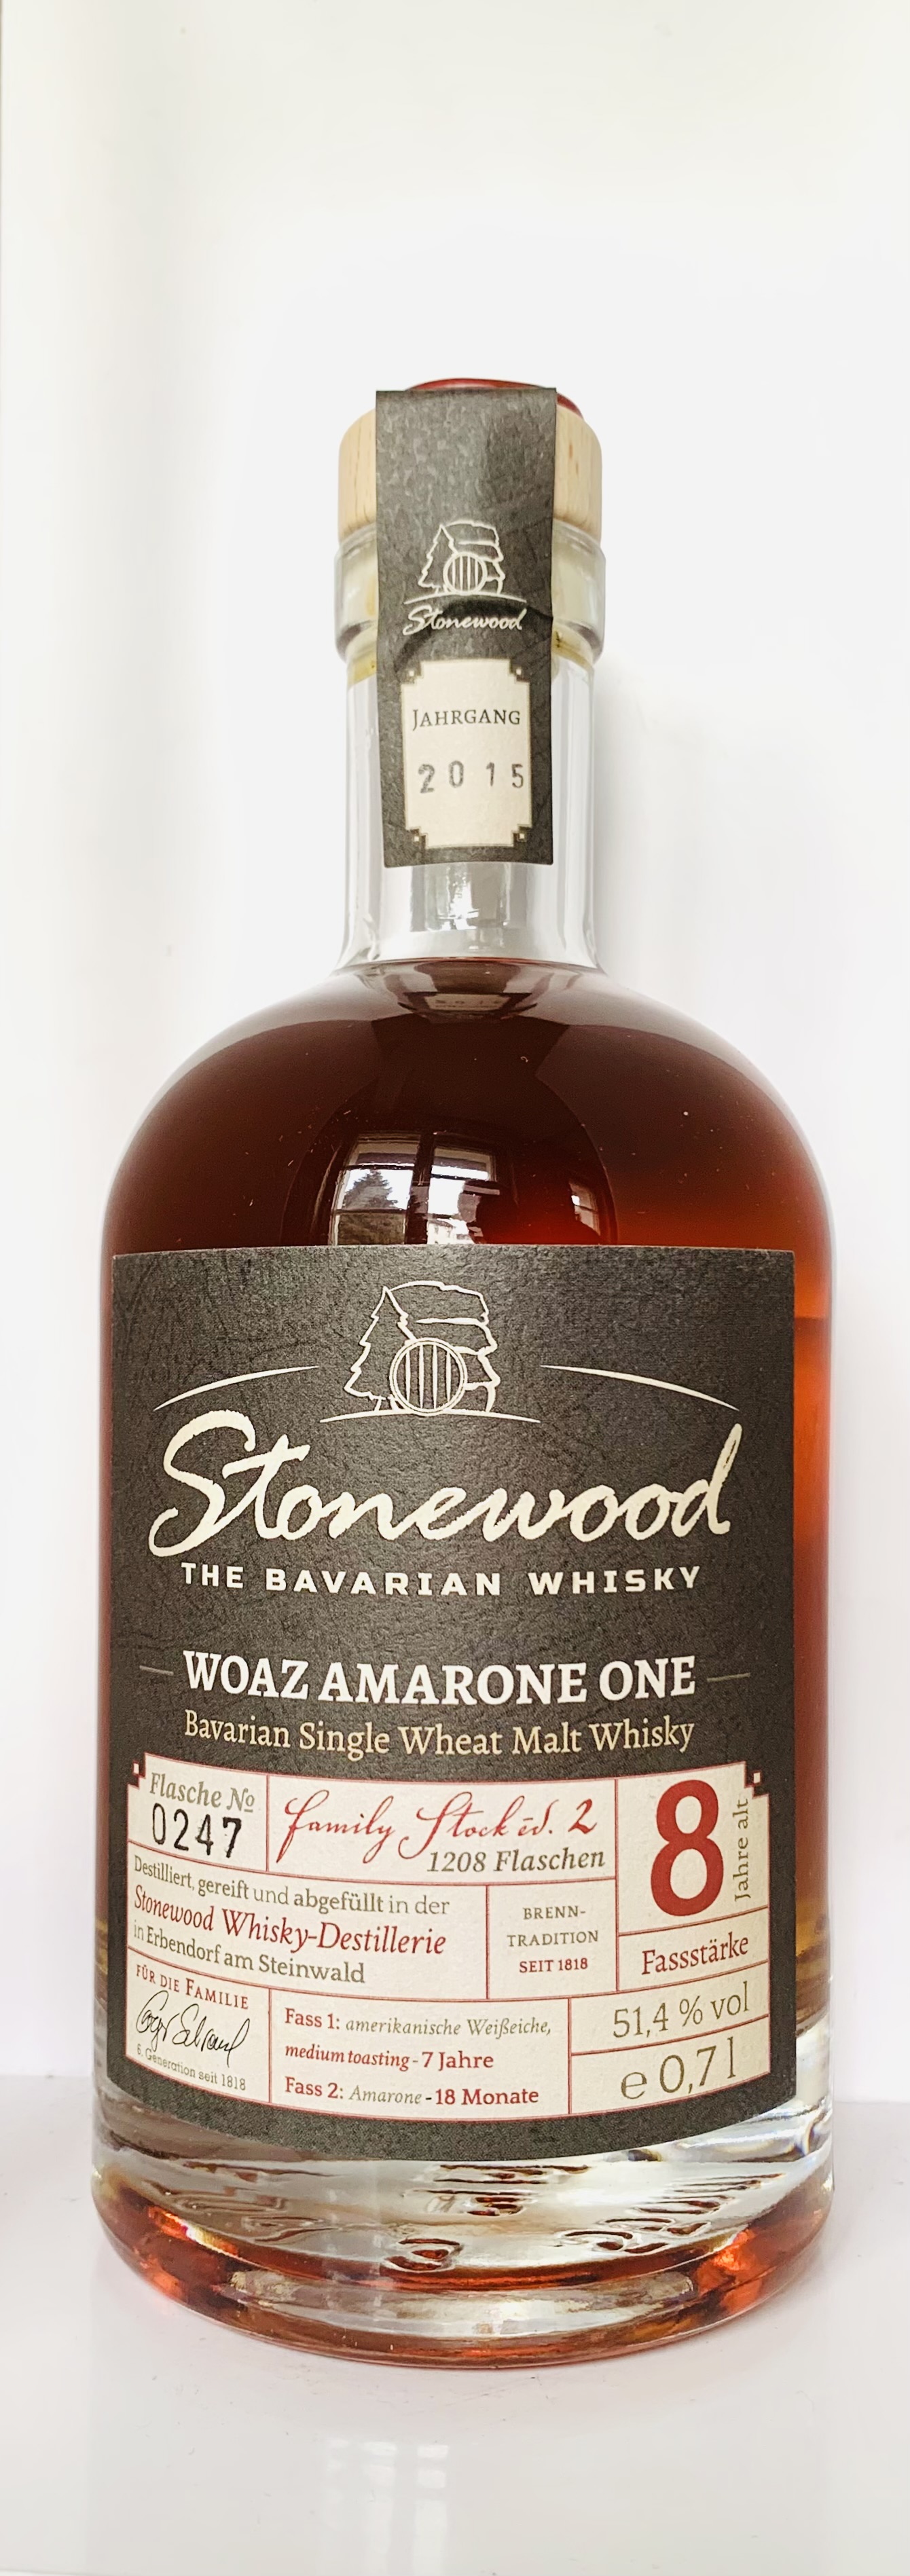 Stonewood 8 Jahre Woaz Amarone One